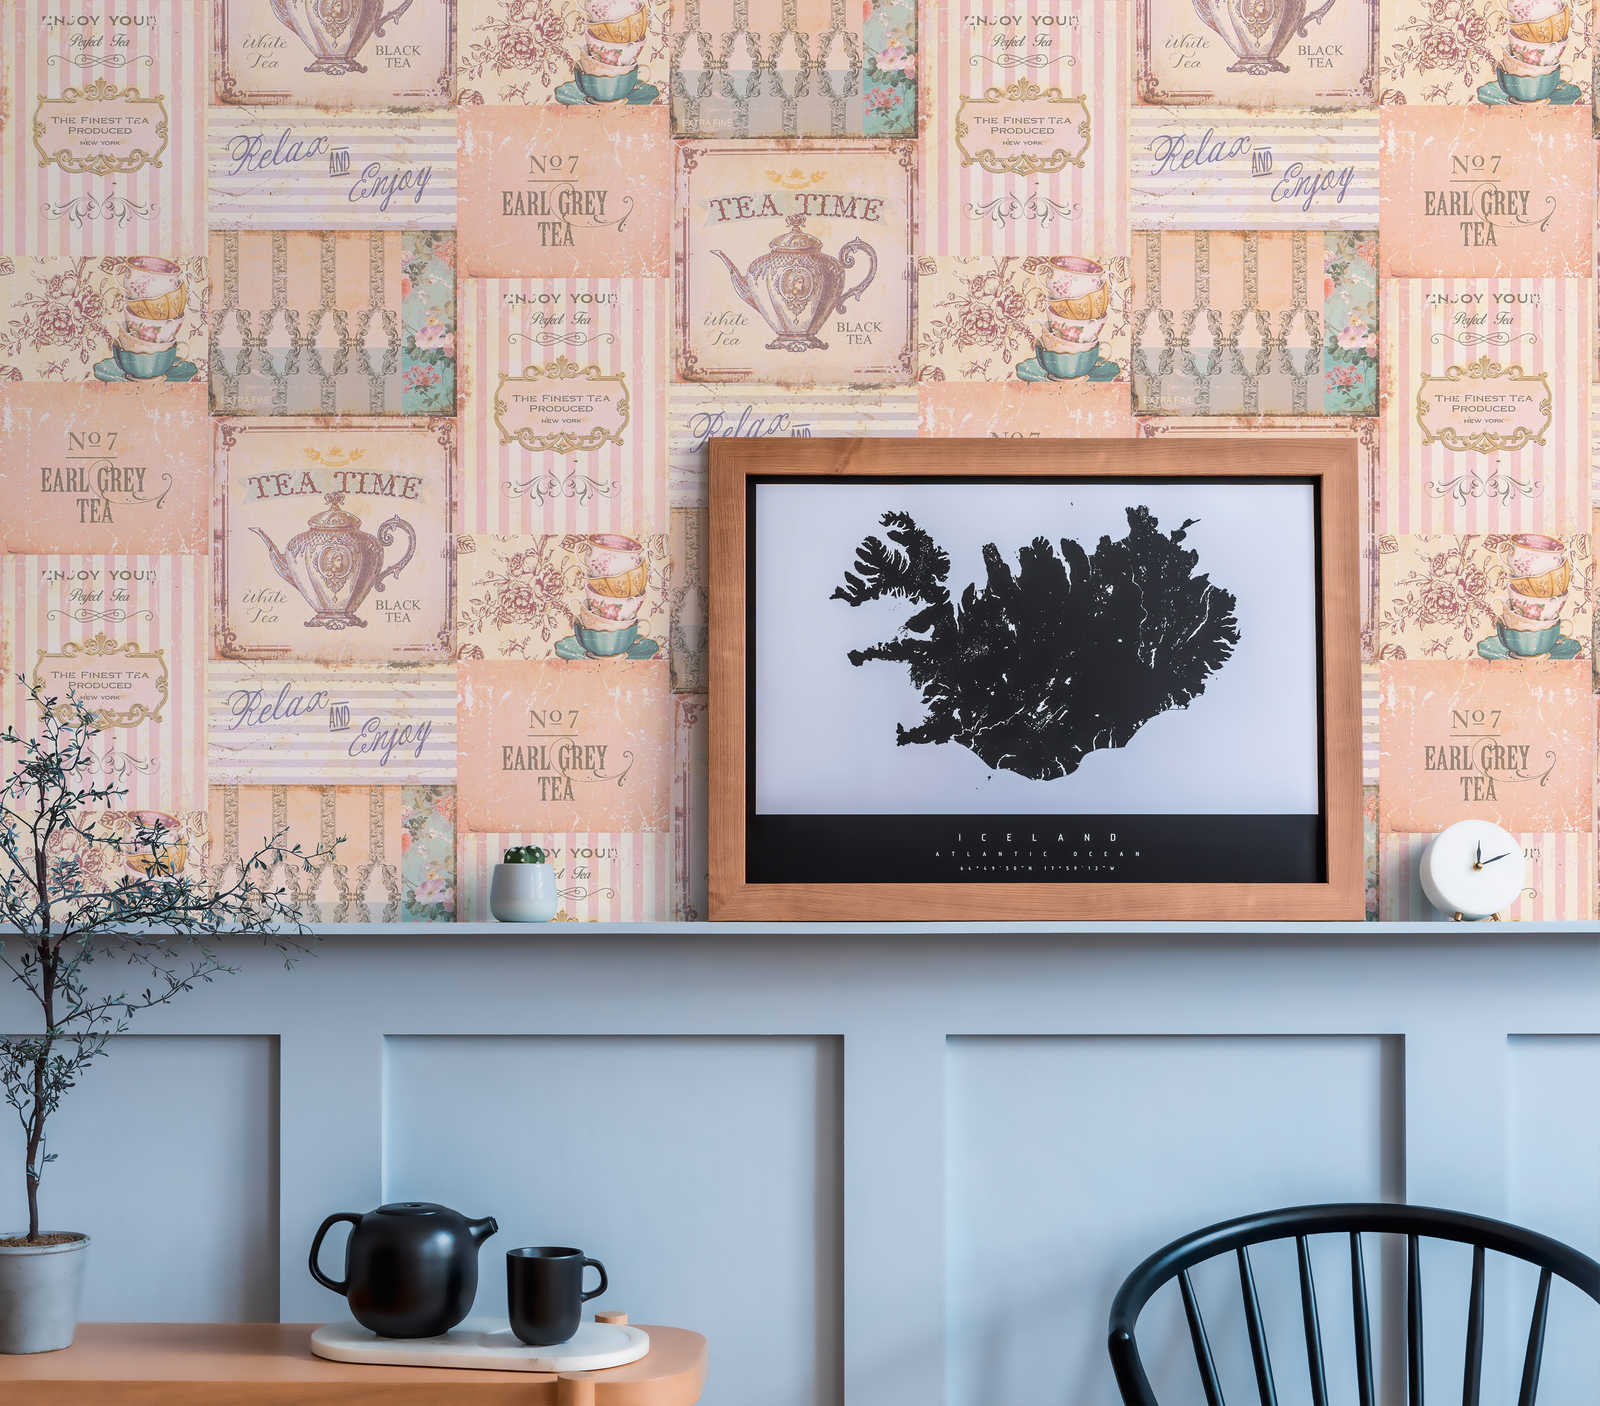             Küchentapete Tea Time Collage im Landhaus Stil – Rosa, Grau, Blau
        